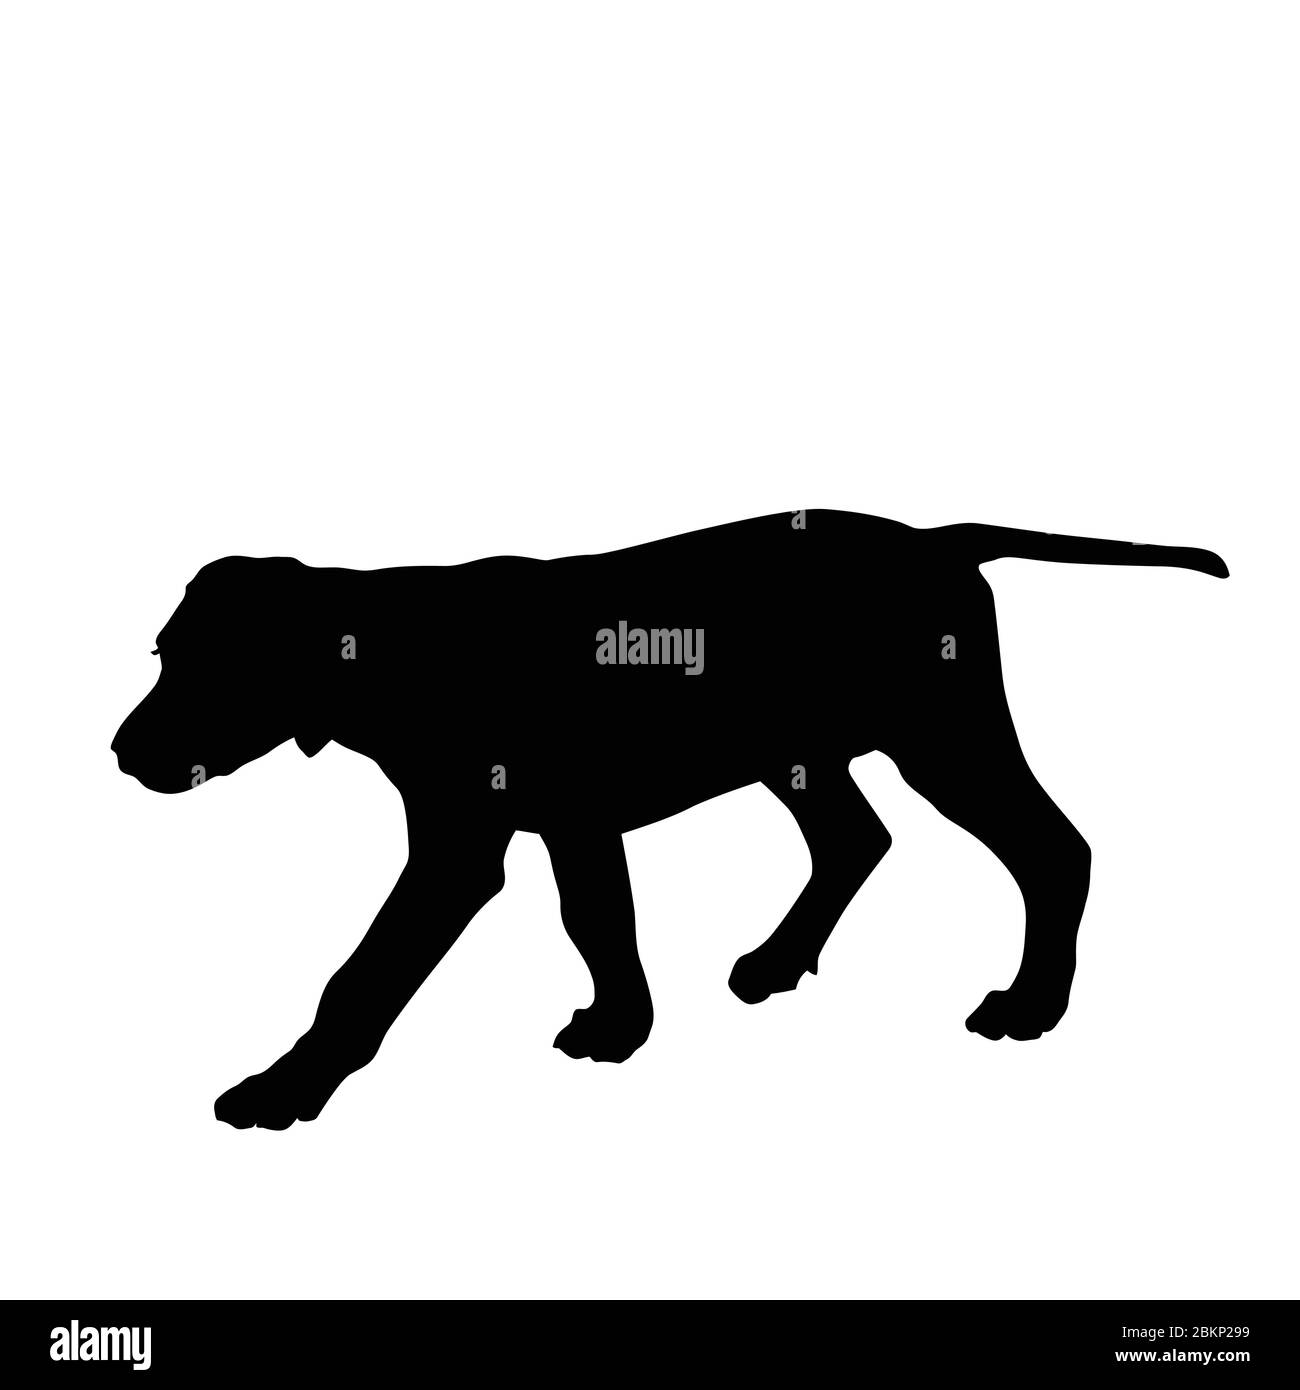 Dog silhouette walking on white background, vector illustration Stock Vector